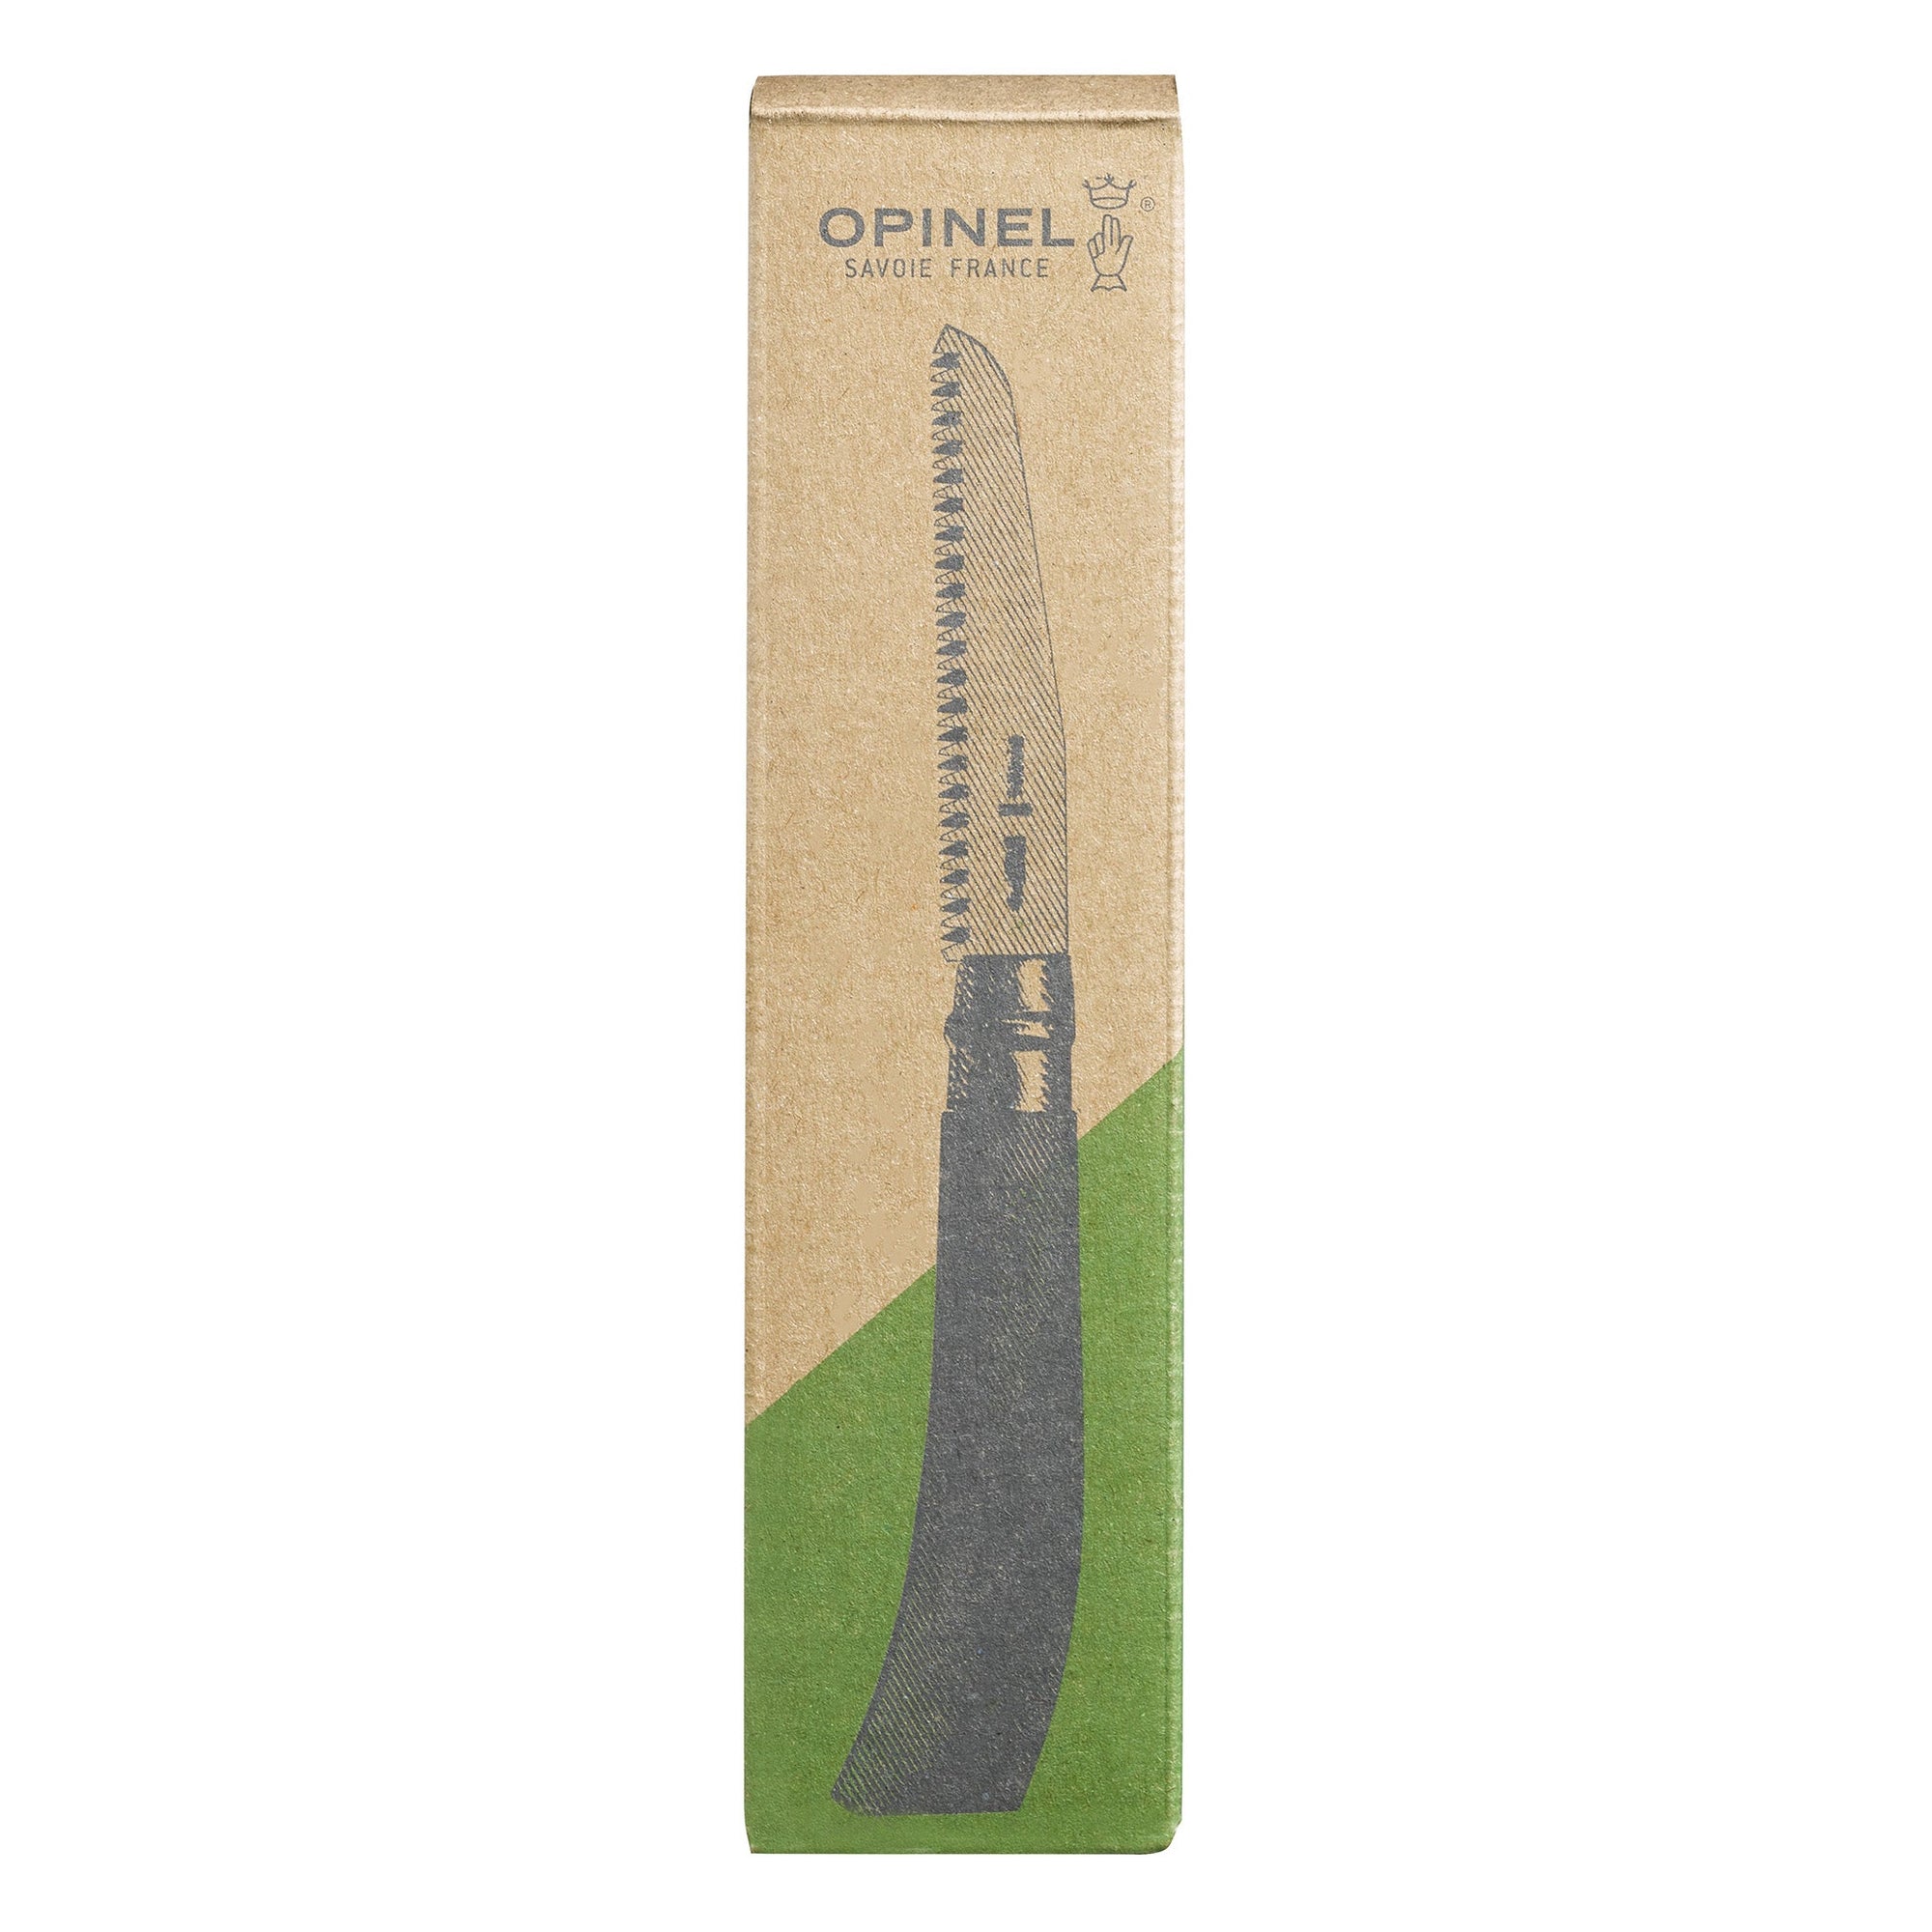 OPINEL N°12 INOX : Couteau de poche pliant - Lame en acier inoxydable de 12  cm - Marque Opinel